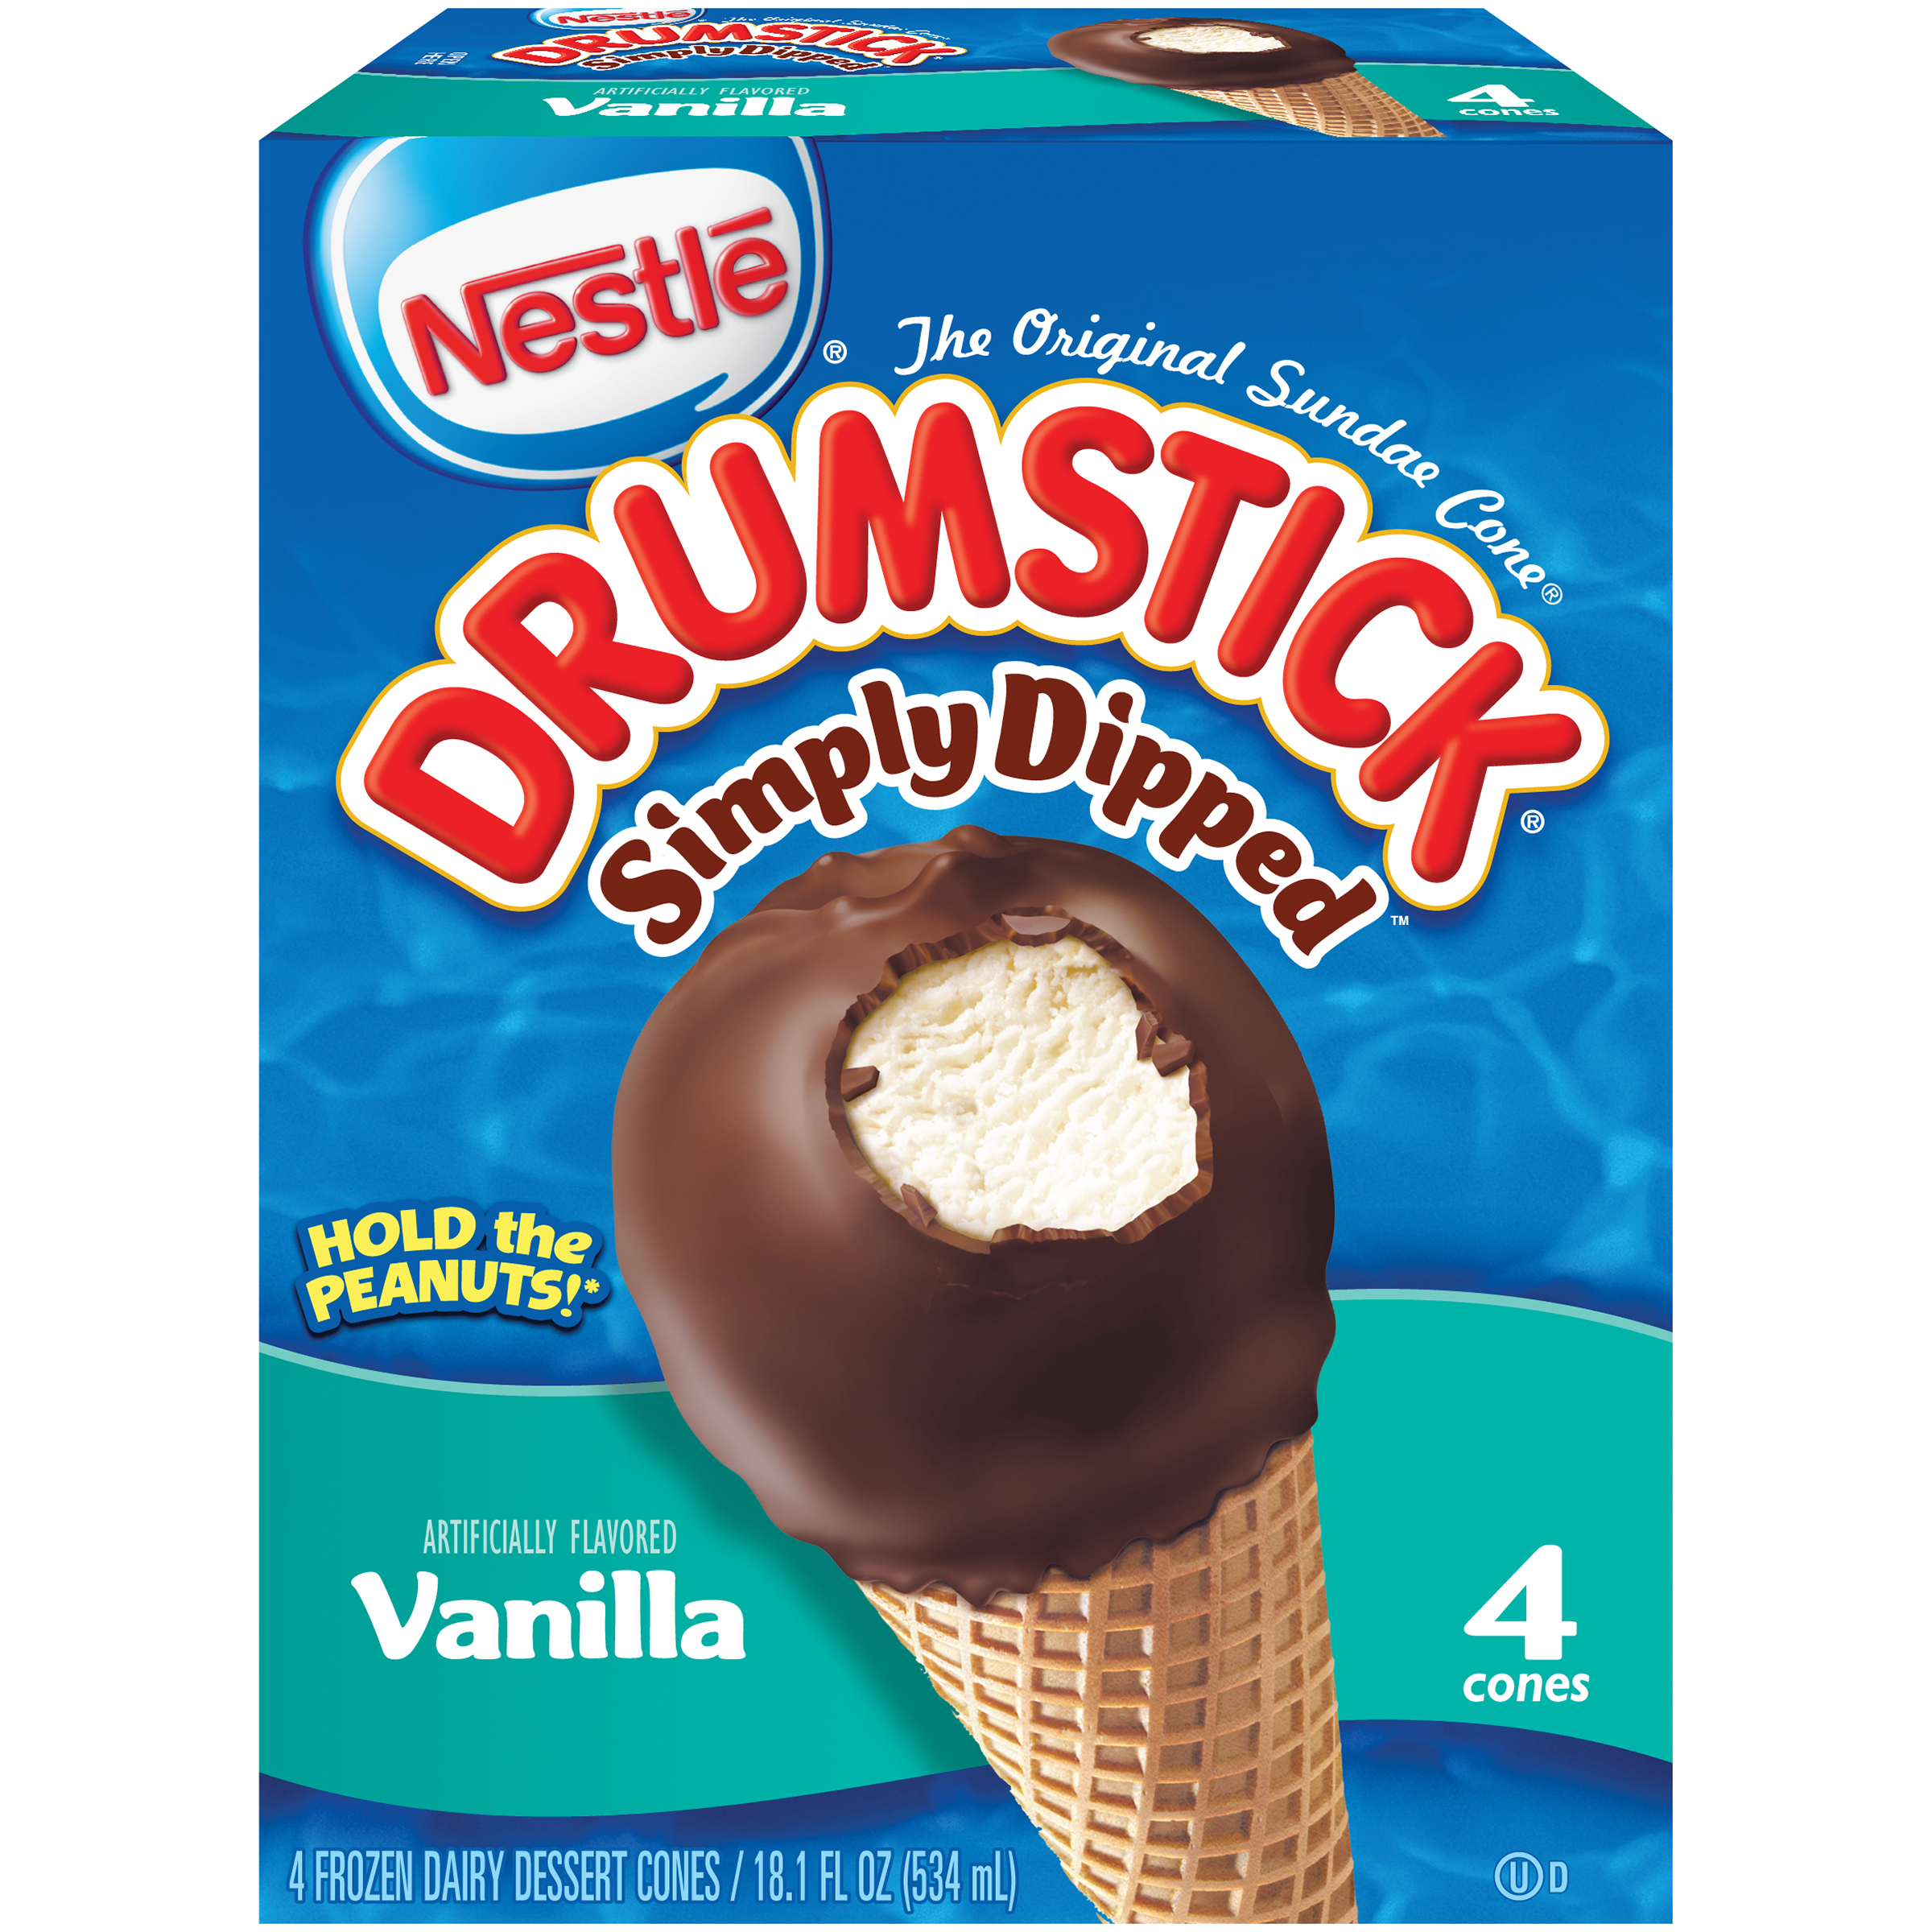 Nestle Drumstick Simply Dipped Vanilla Ice Cream cones [18.1 fl oz (534 ml)]